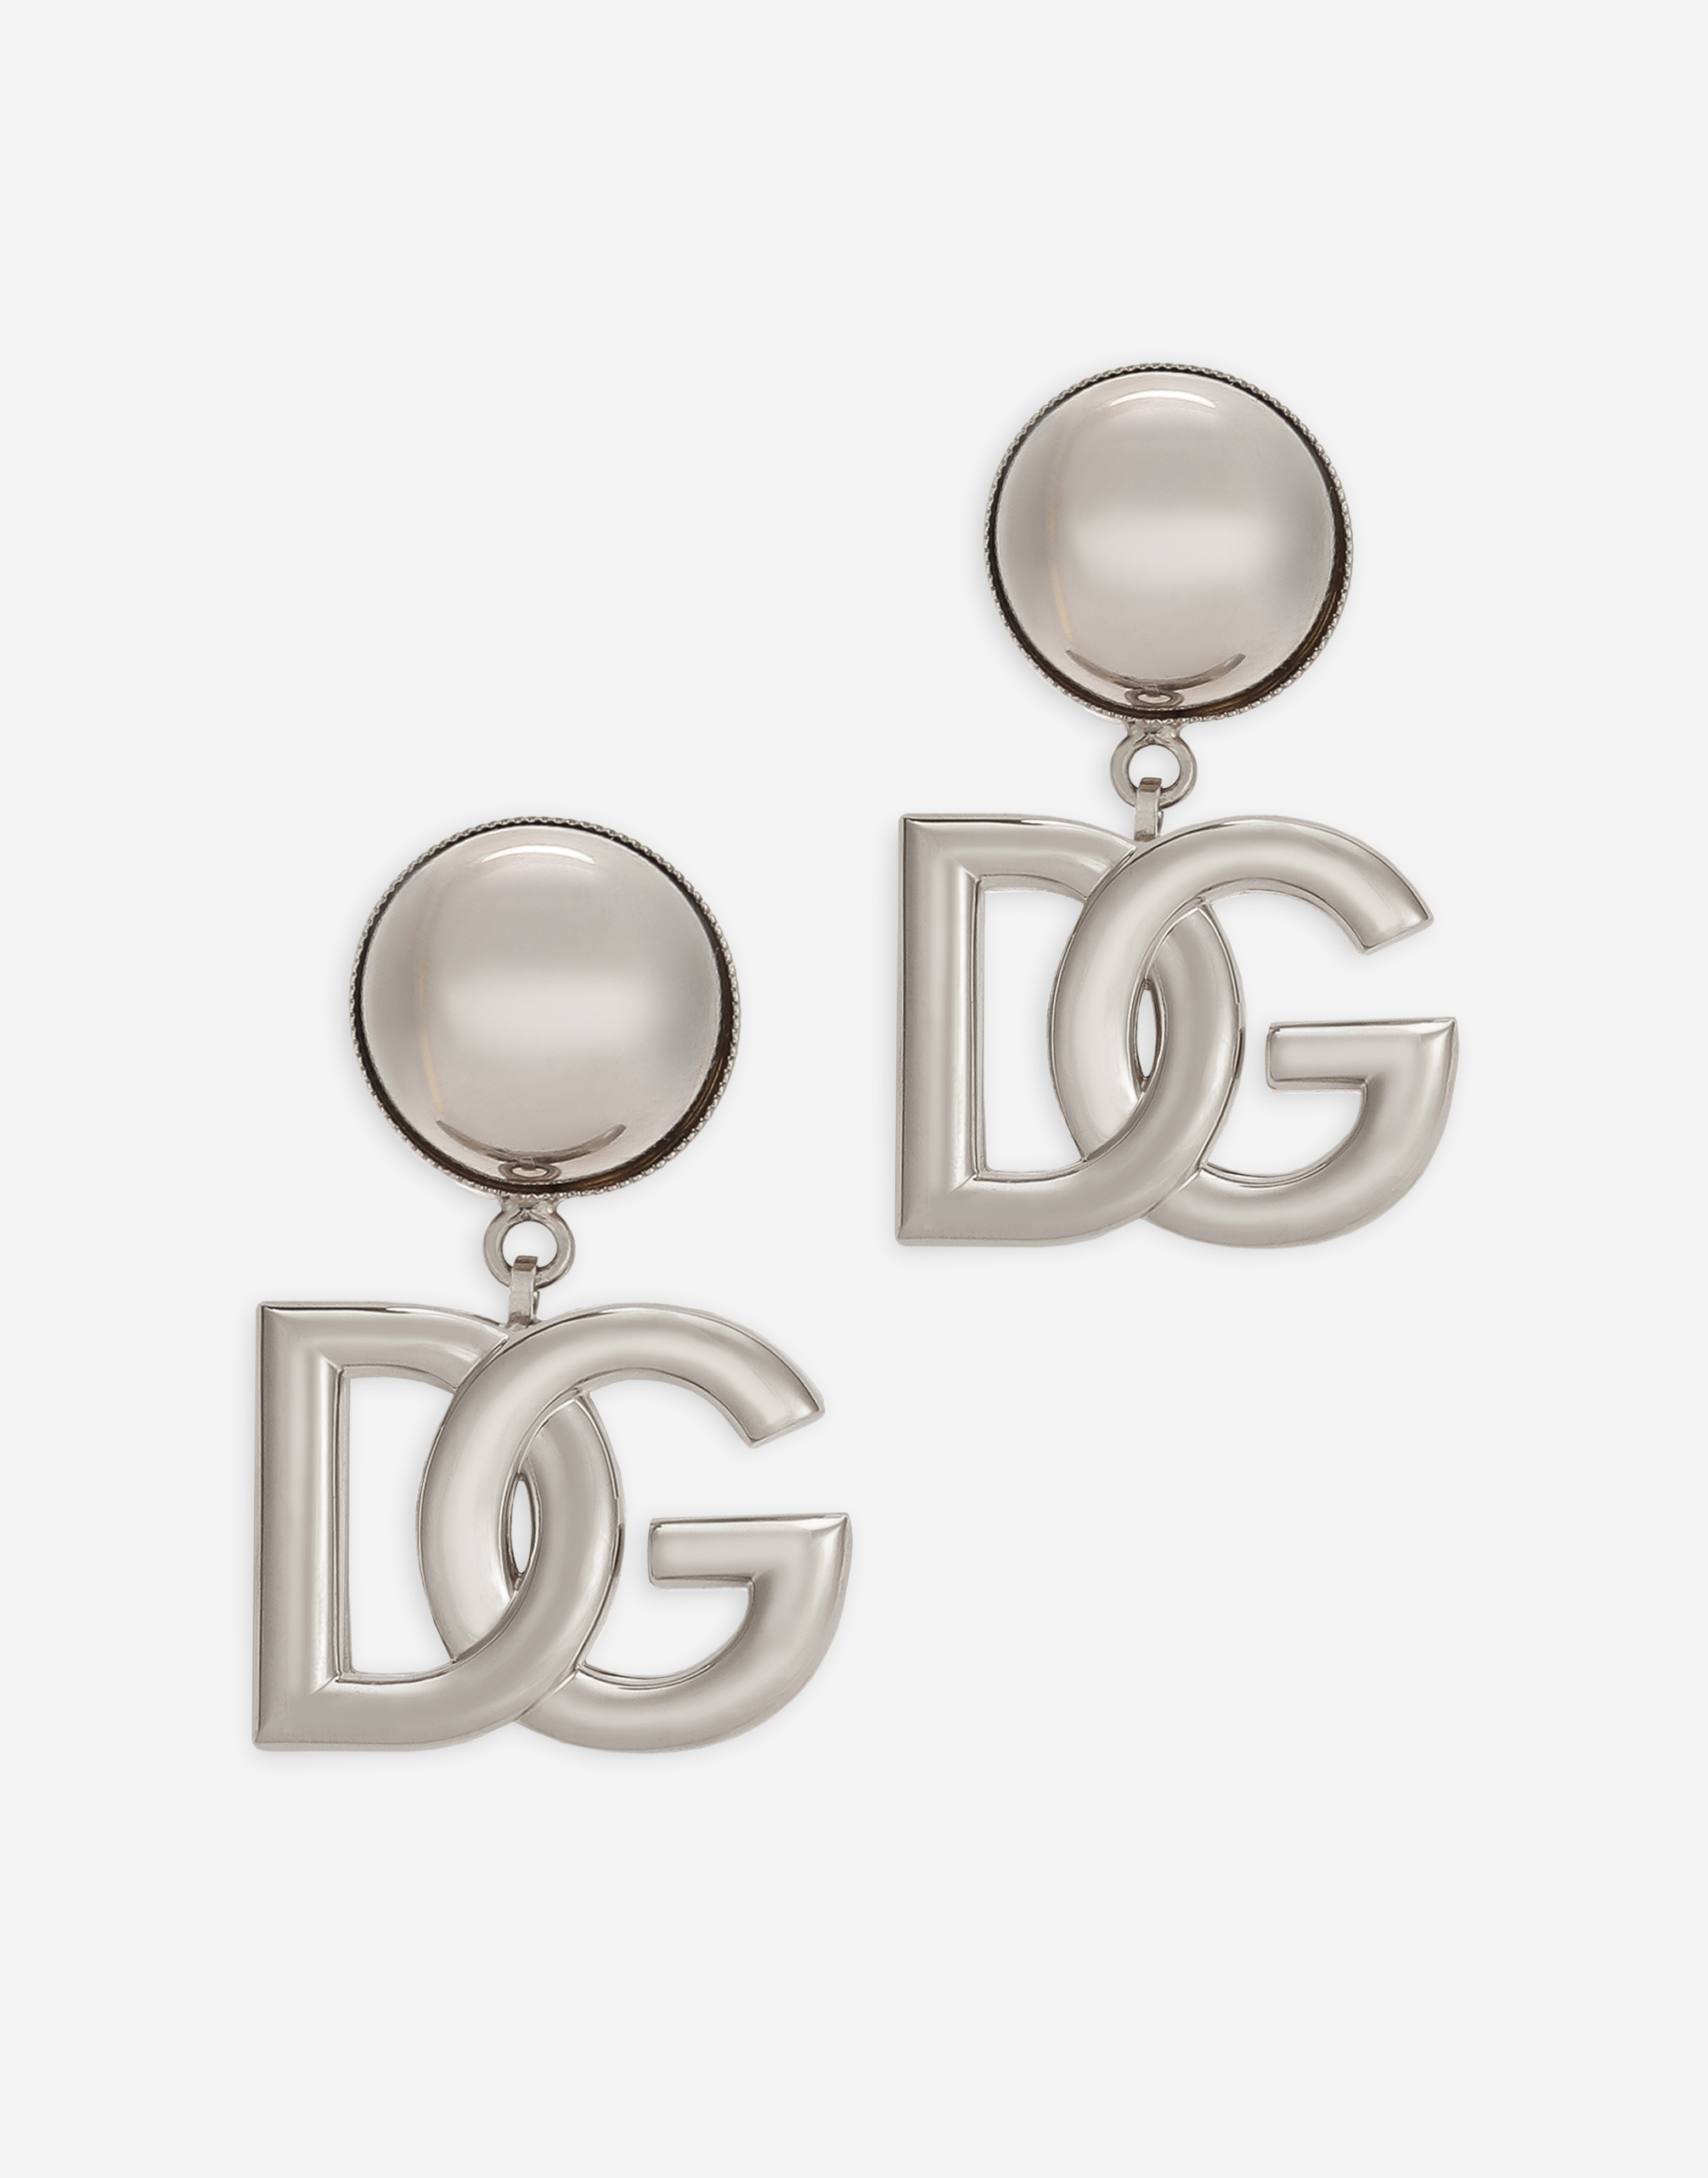 Clip-on earrings with DG logo in Silver